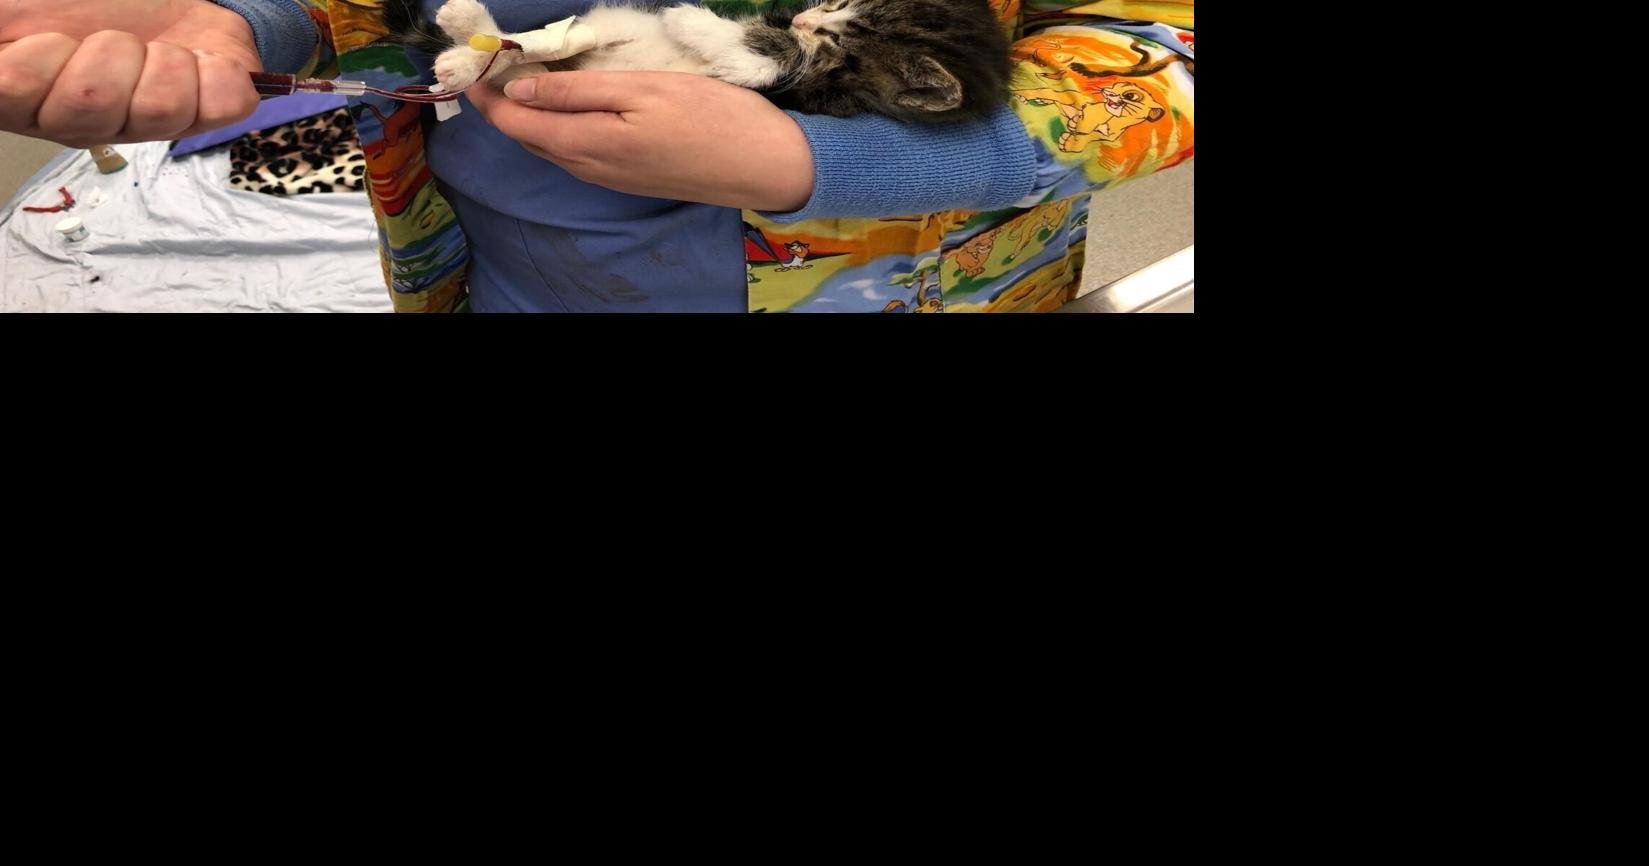 Hero husky saves kitty with blood transfusion at Nebraska Humane